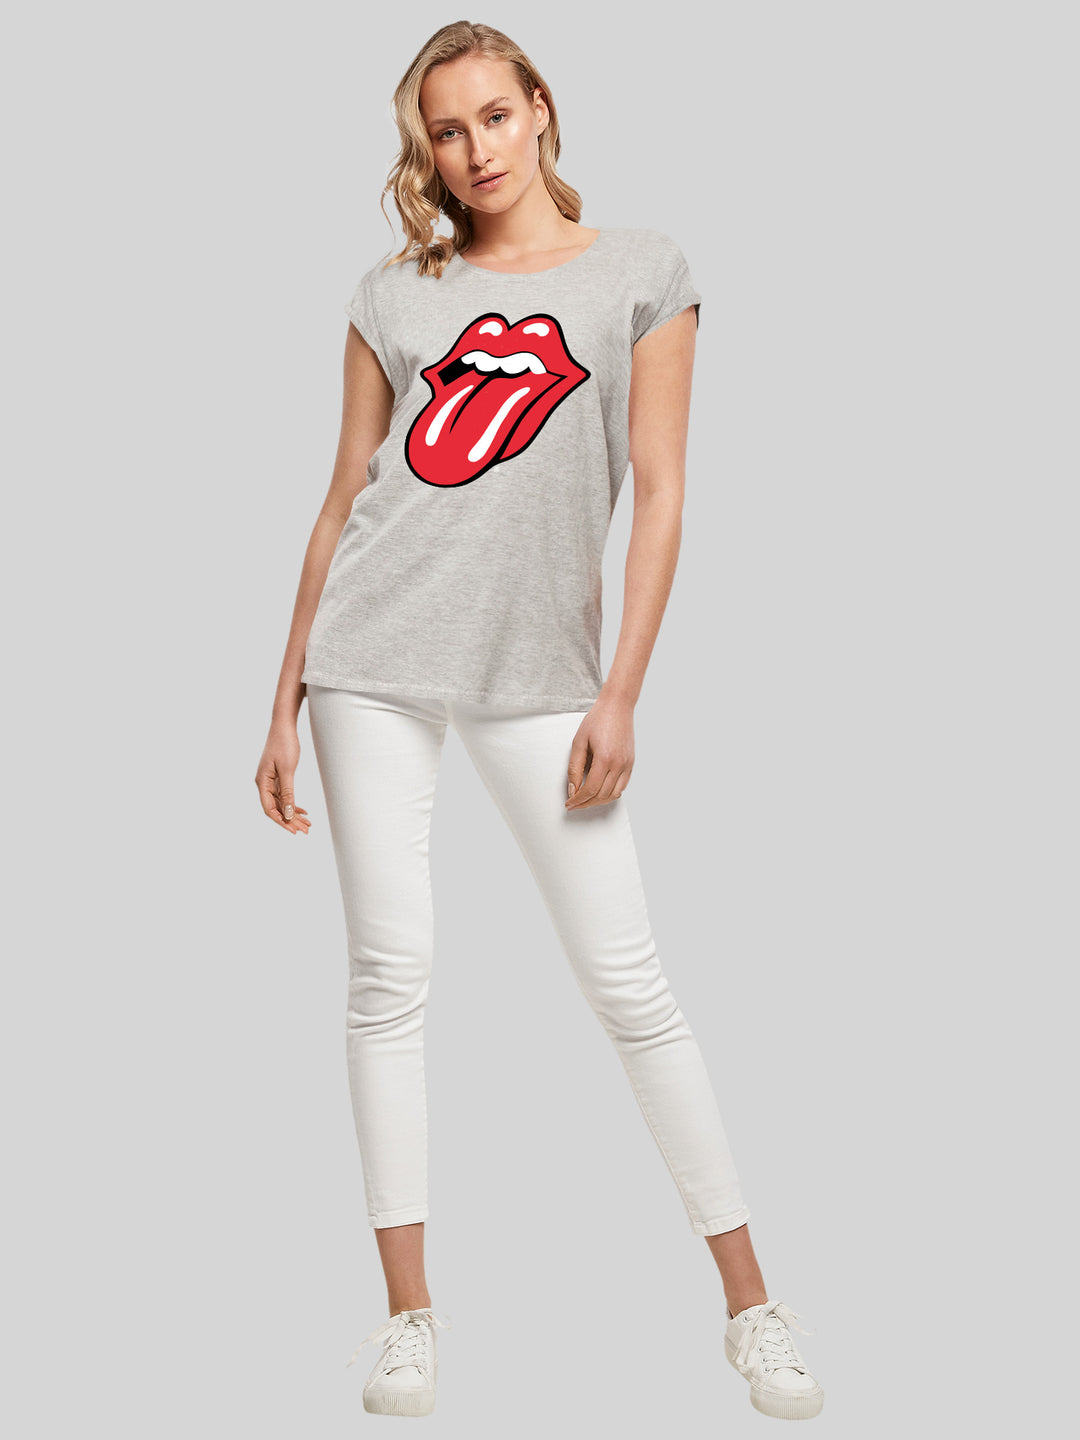 Classic | The Tongue Premium Sleeve T-Shirt Stones Lad – | Rolling F4NT4STIC Short